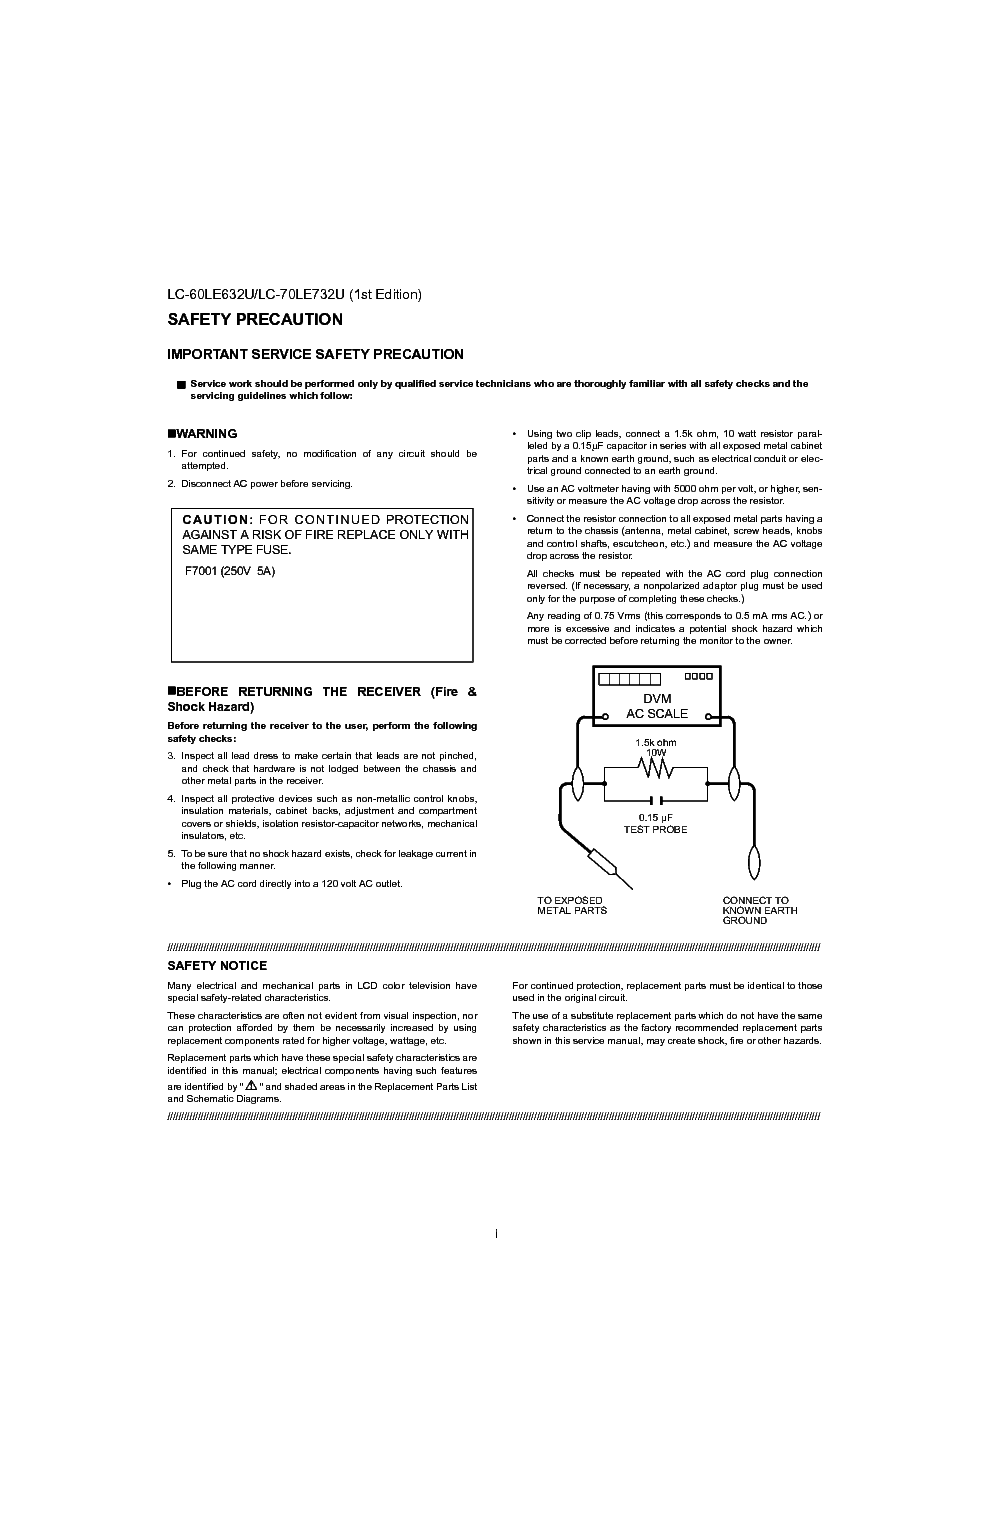 SHARP LC-60LE632U 70LE732U SM service manual (2nd page)